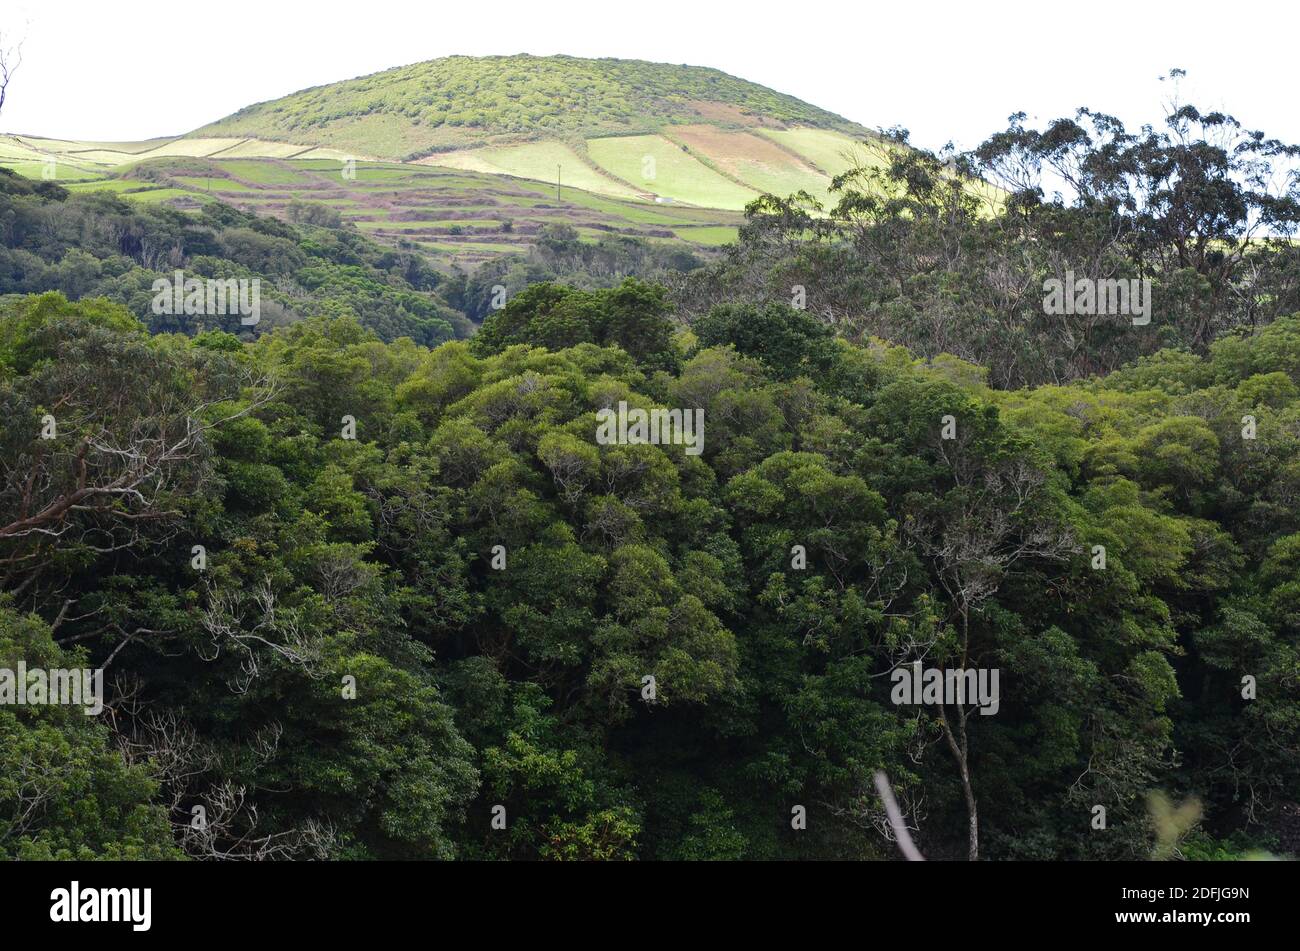 Forests in Graciosa island, Azores archipelago, Portugal Stock Photo